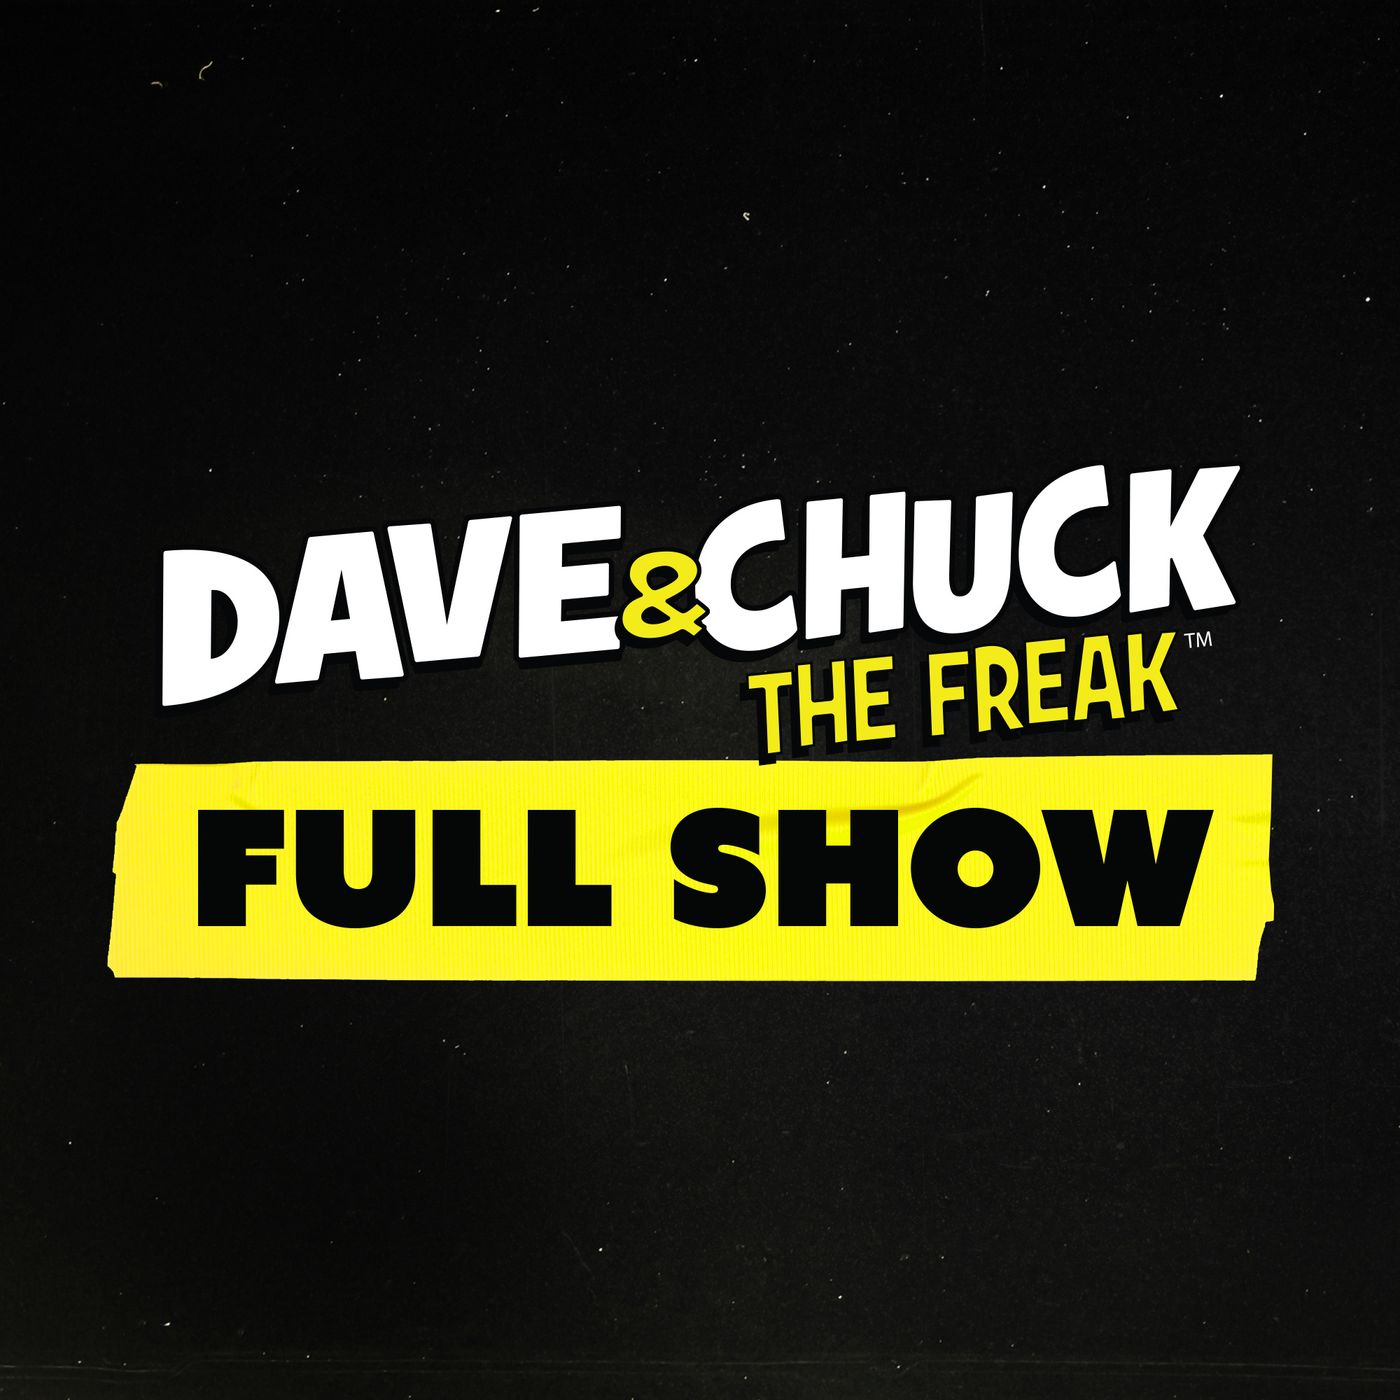 Thursday, March 16th 2023 Dave & Chuck the Freak Full Show